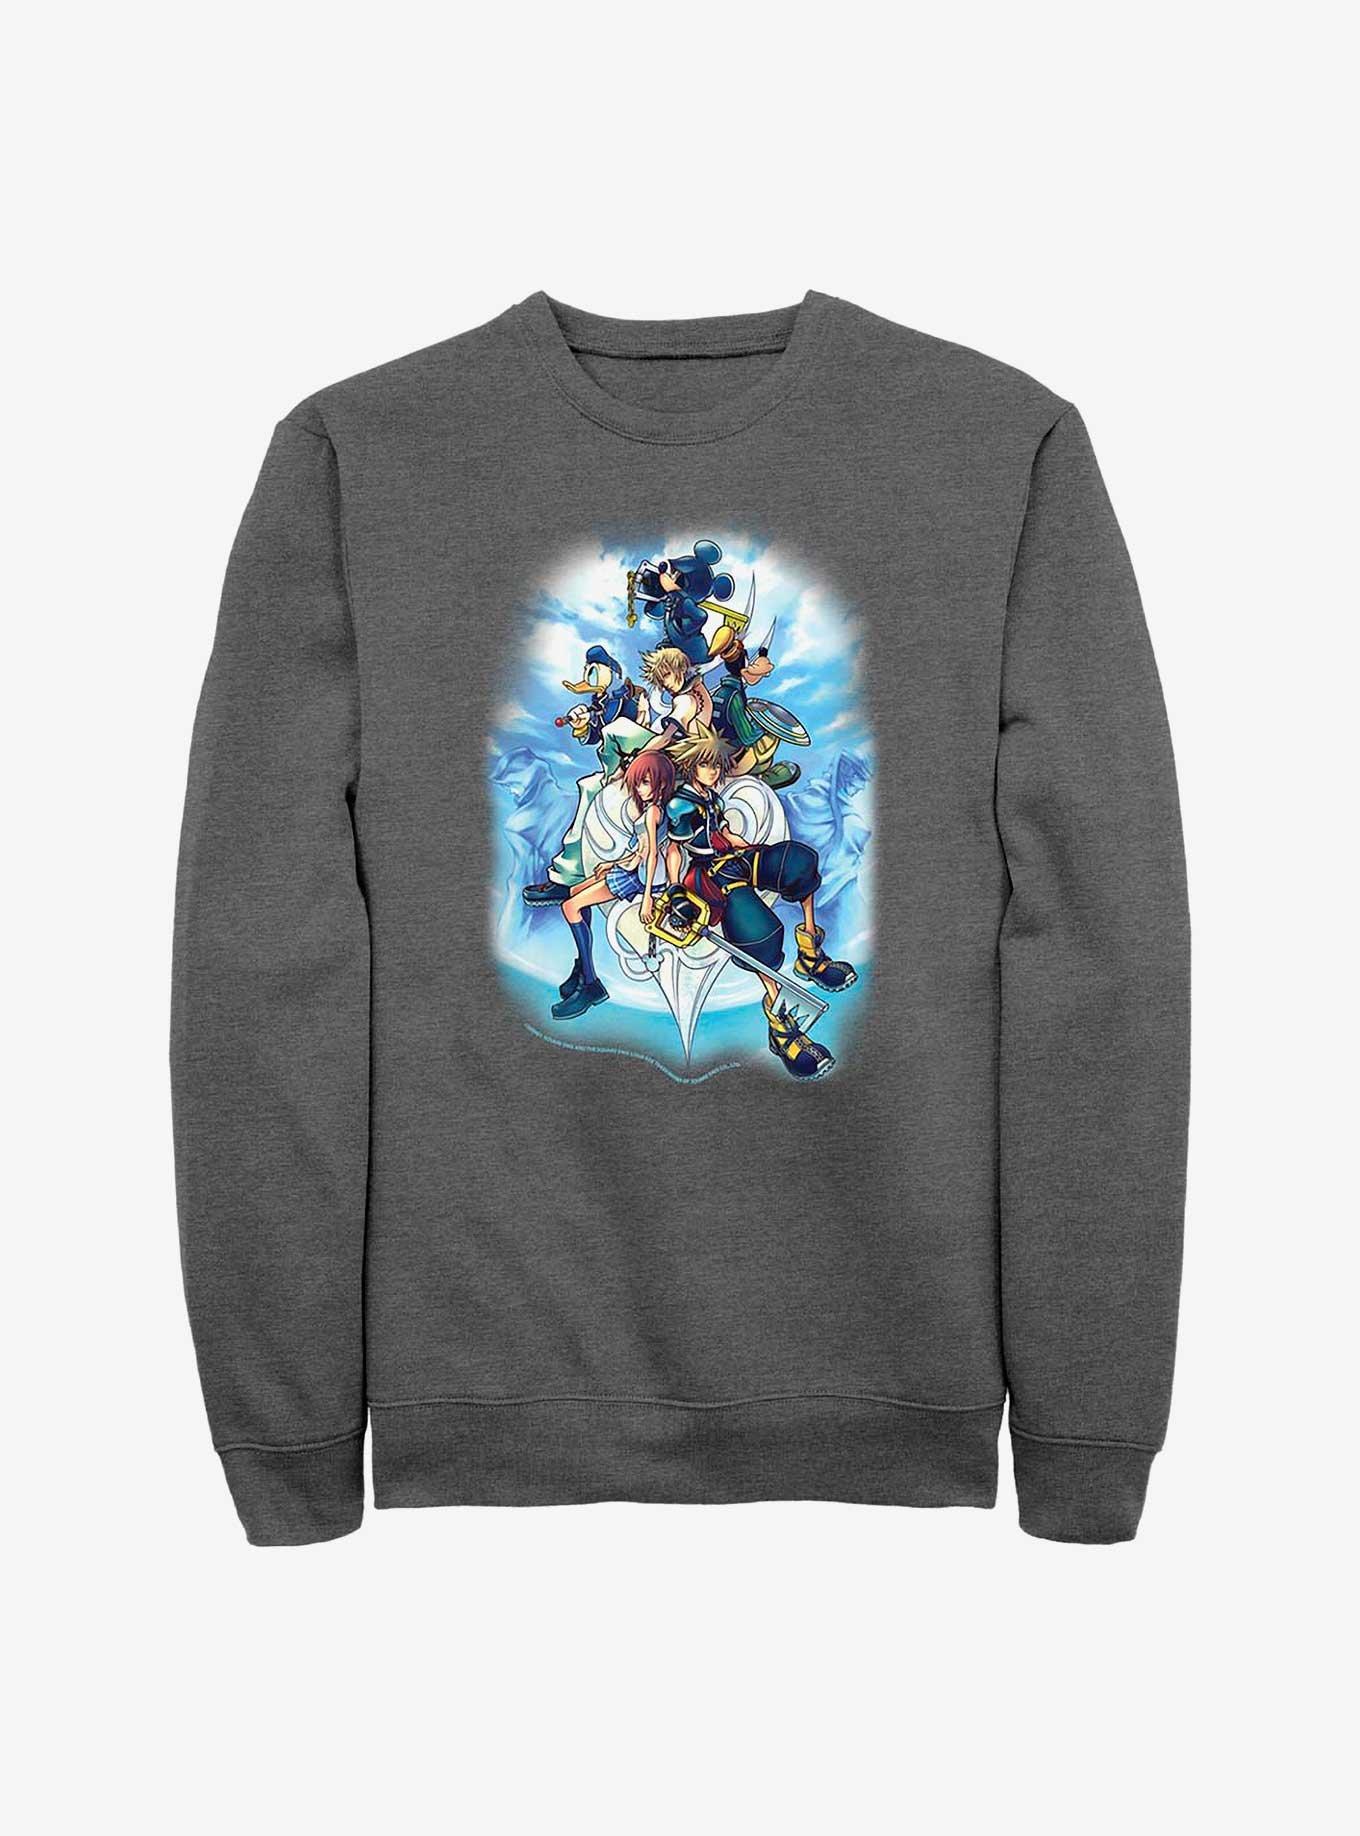 Disney Kingdom Hearts Sky Group Crew Sweatshirt, CHAR HTR, hi-res